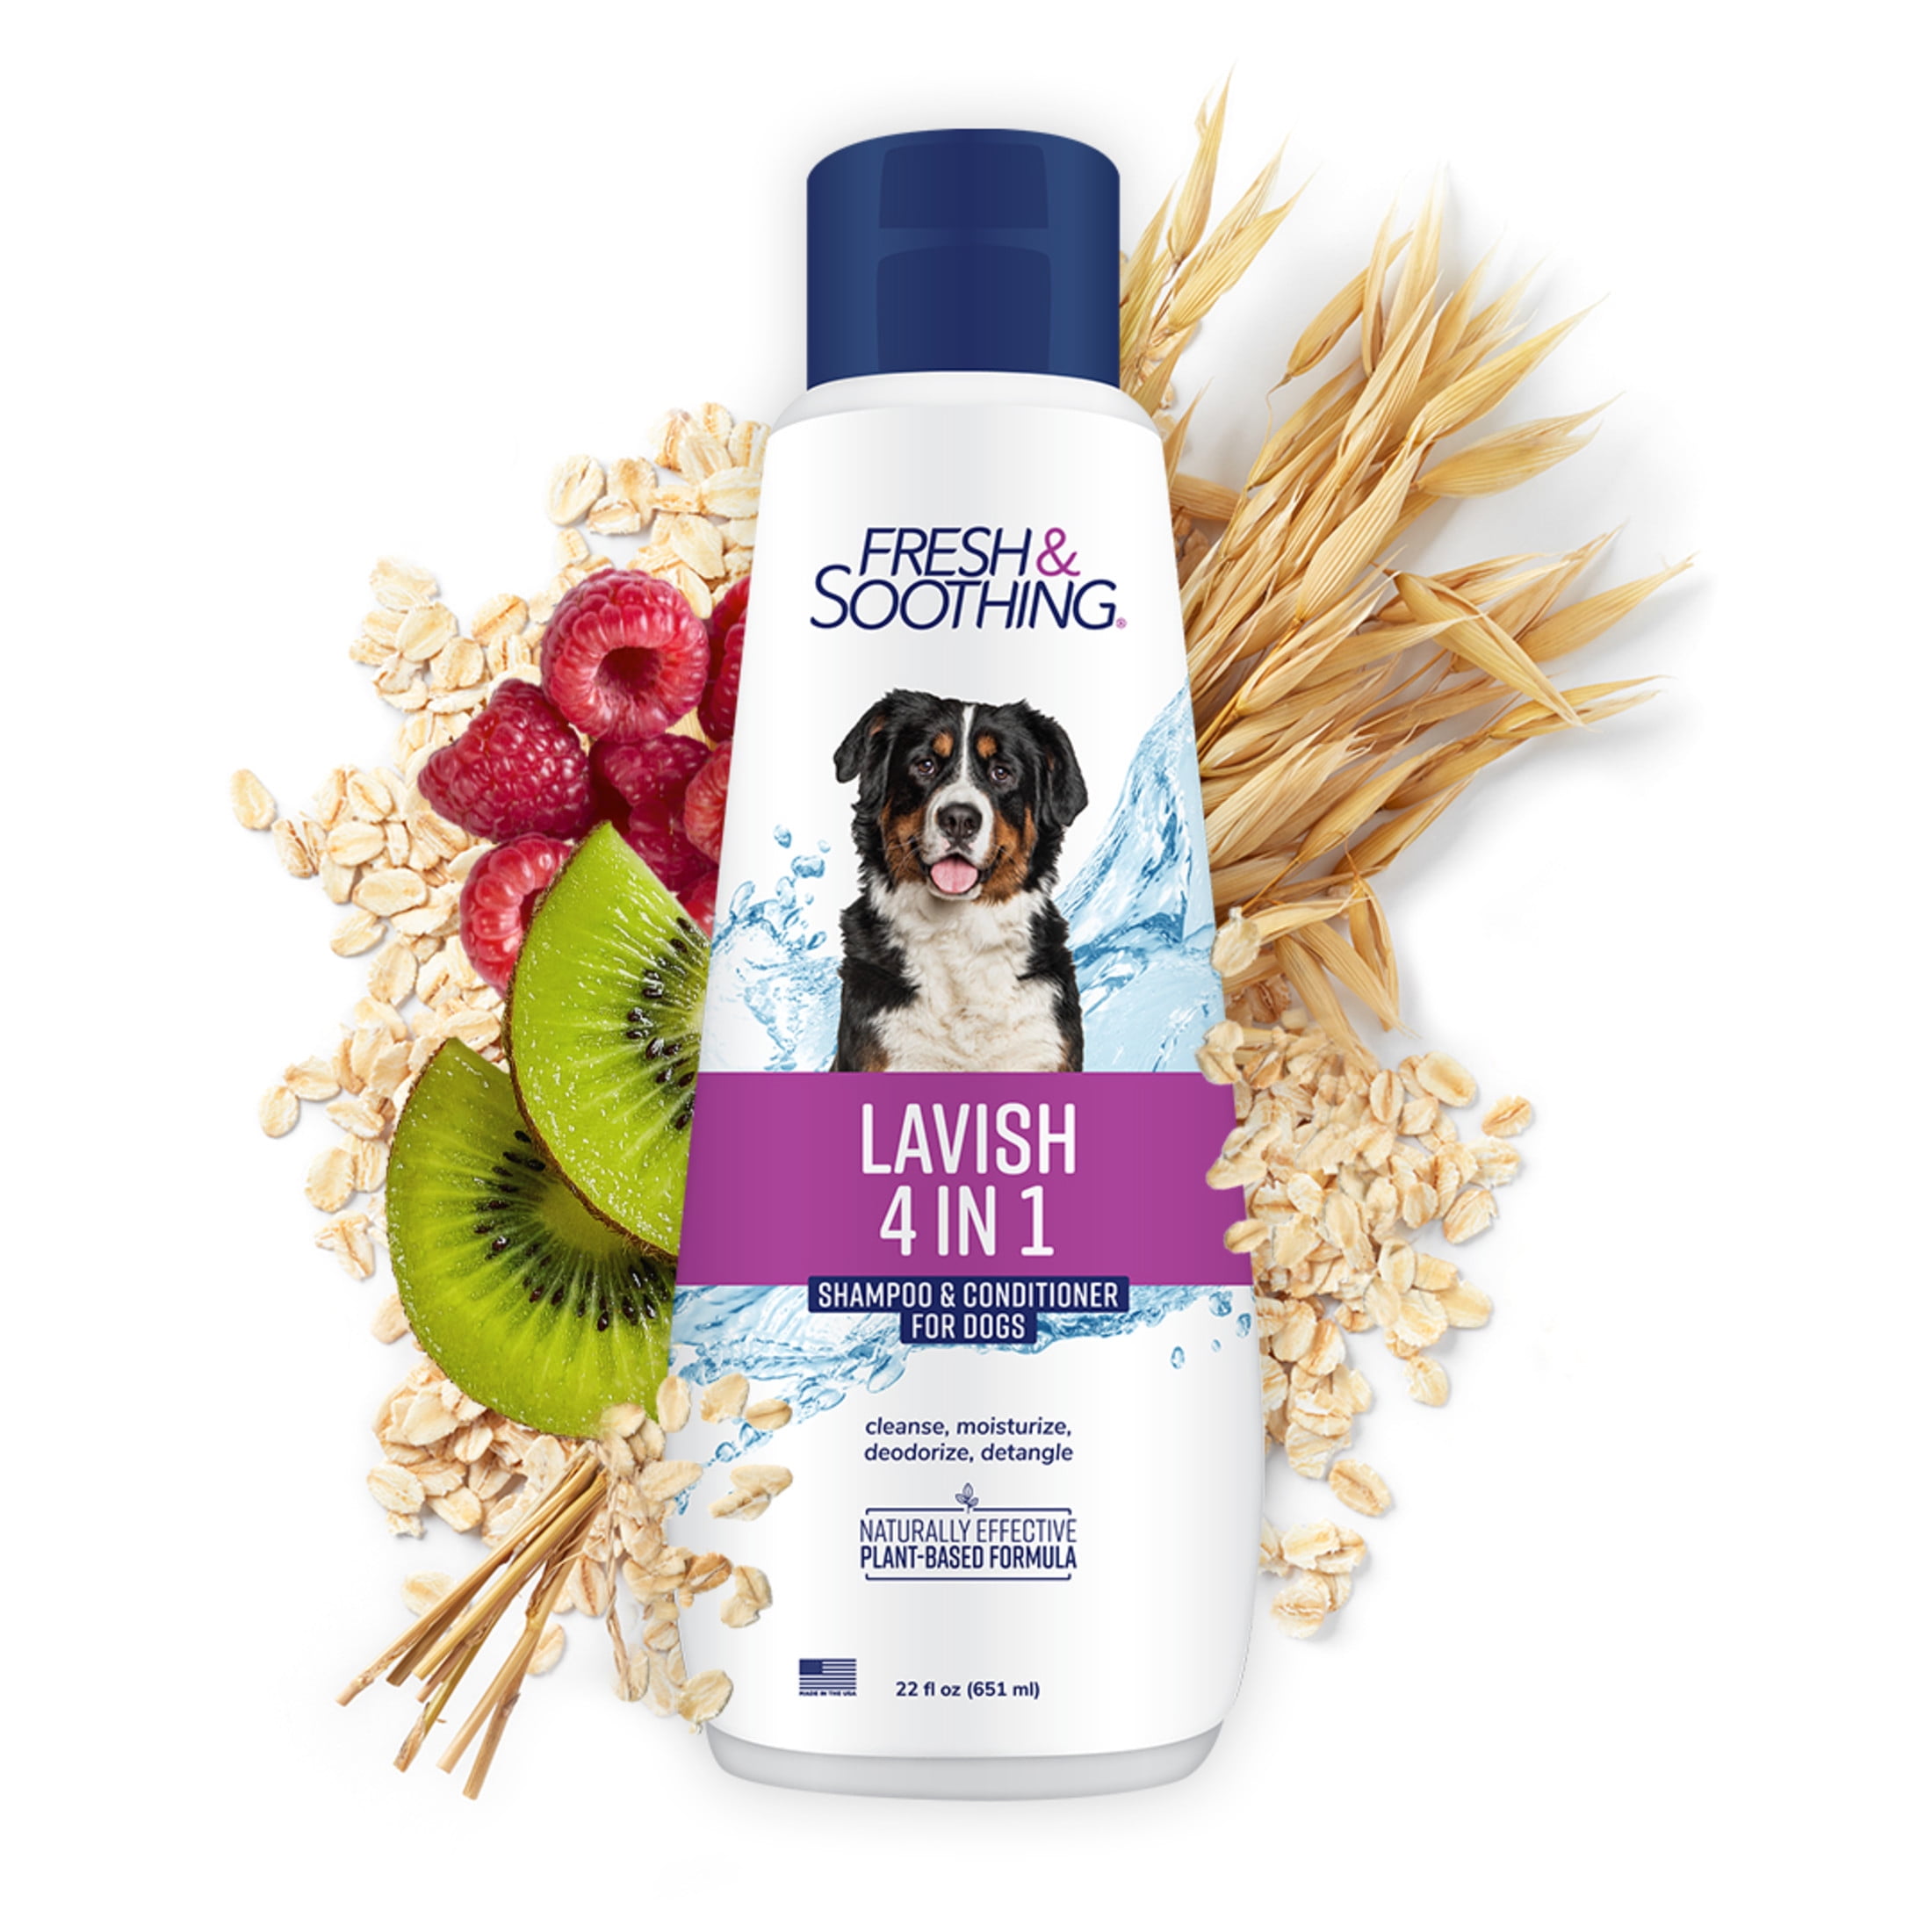 Naturel Promise & Soothing Lavish 4-in-1 Dog Shampoo and Conditioner Pets, 22oz Walmart.com